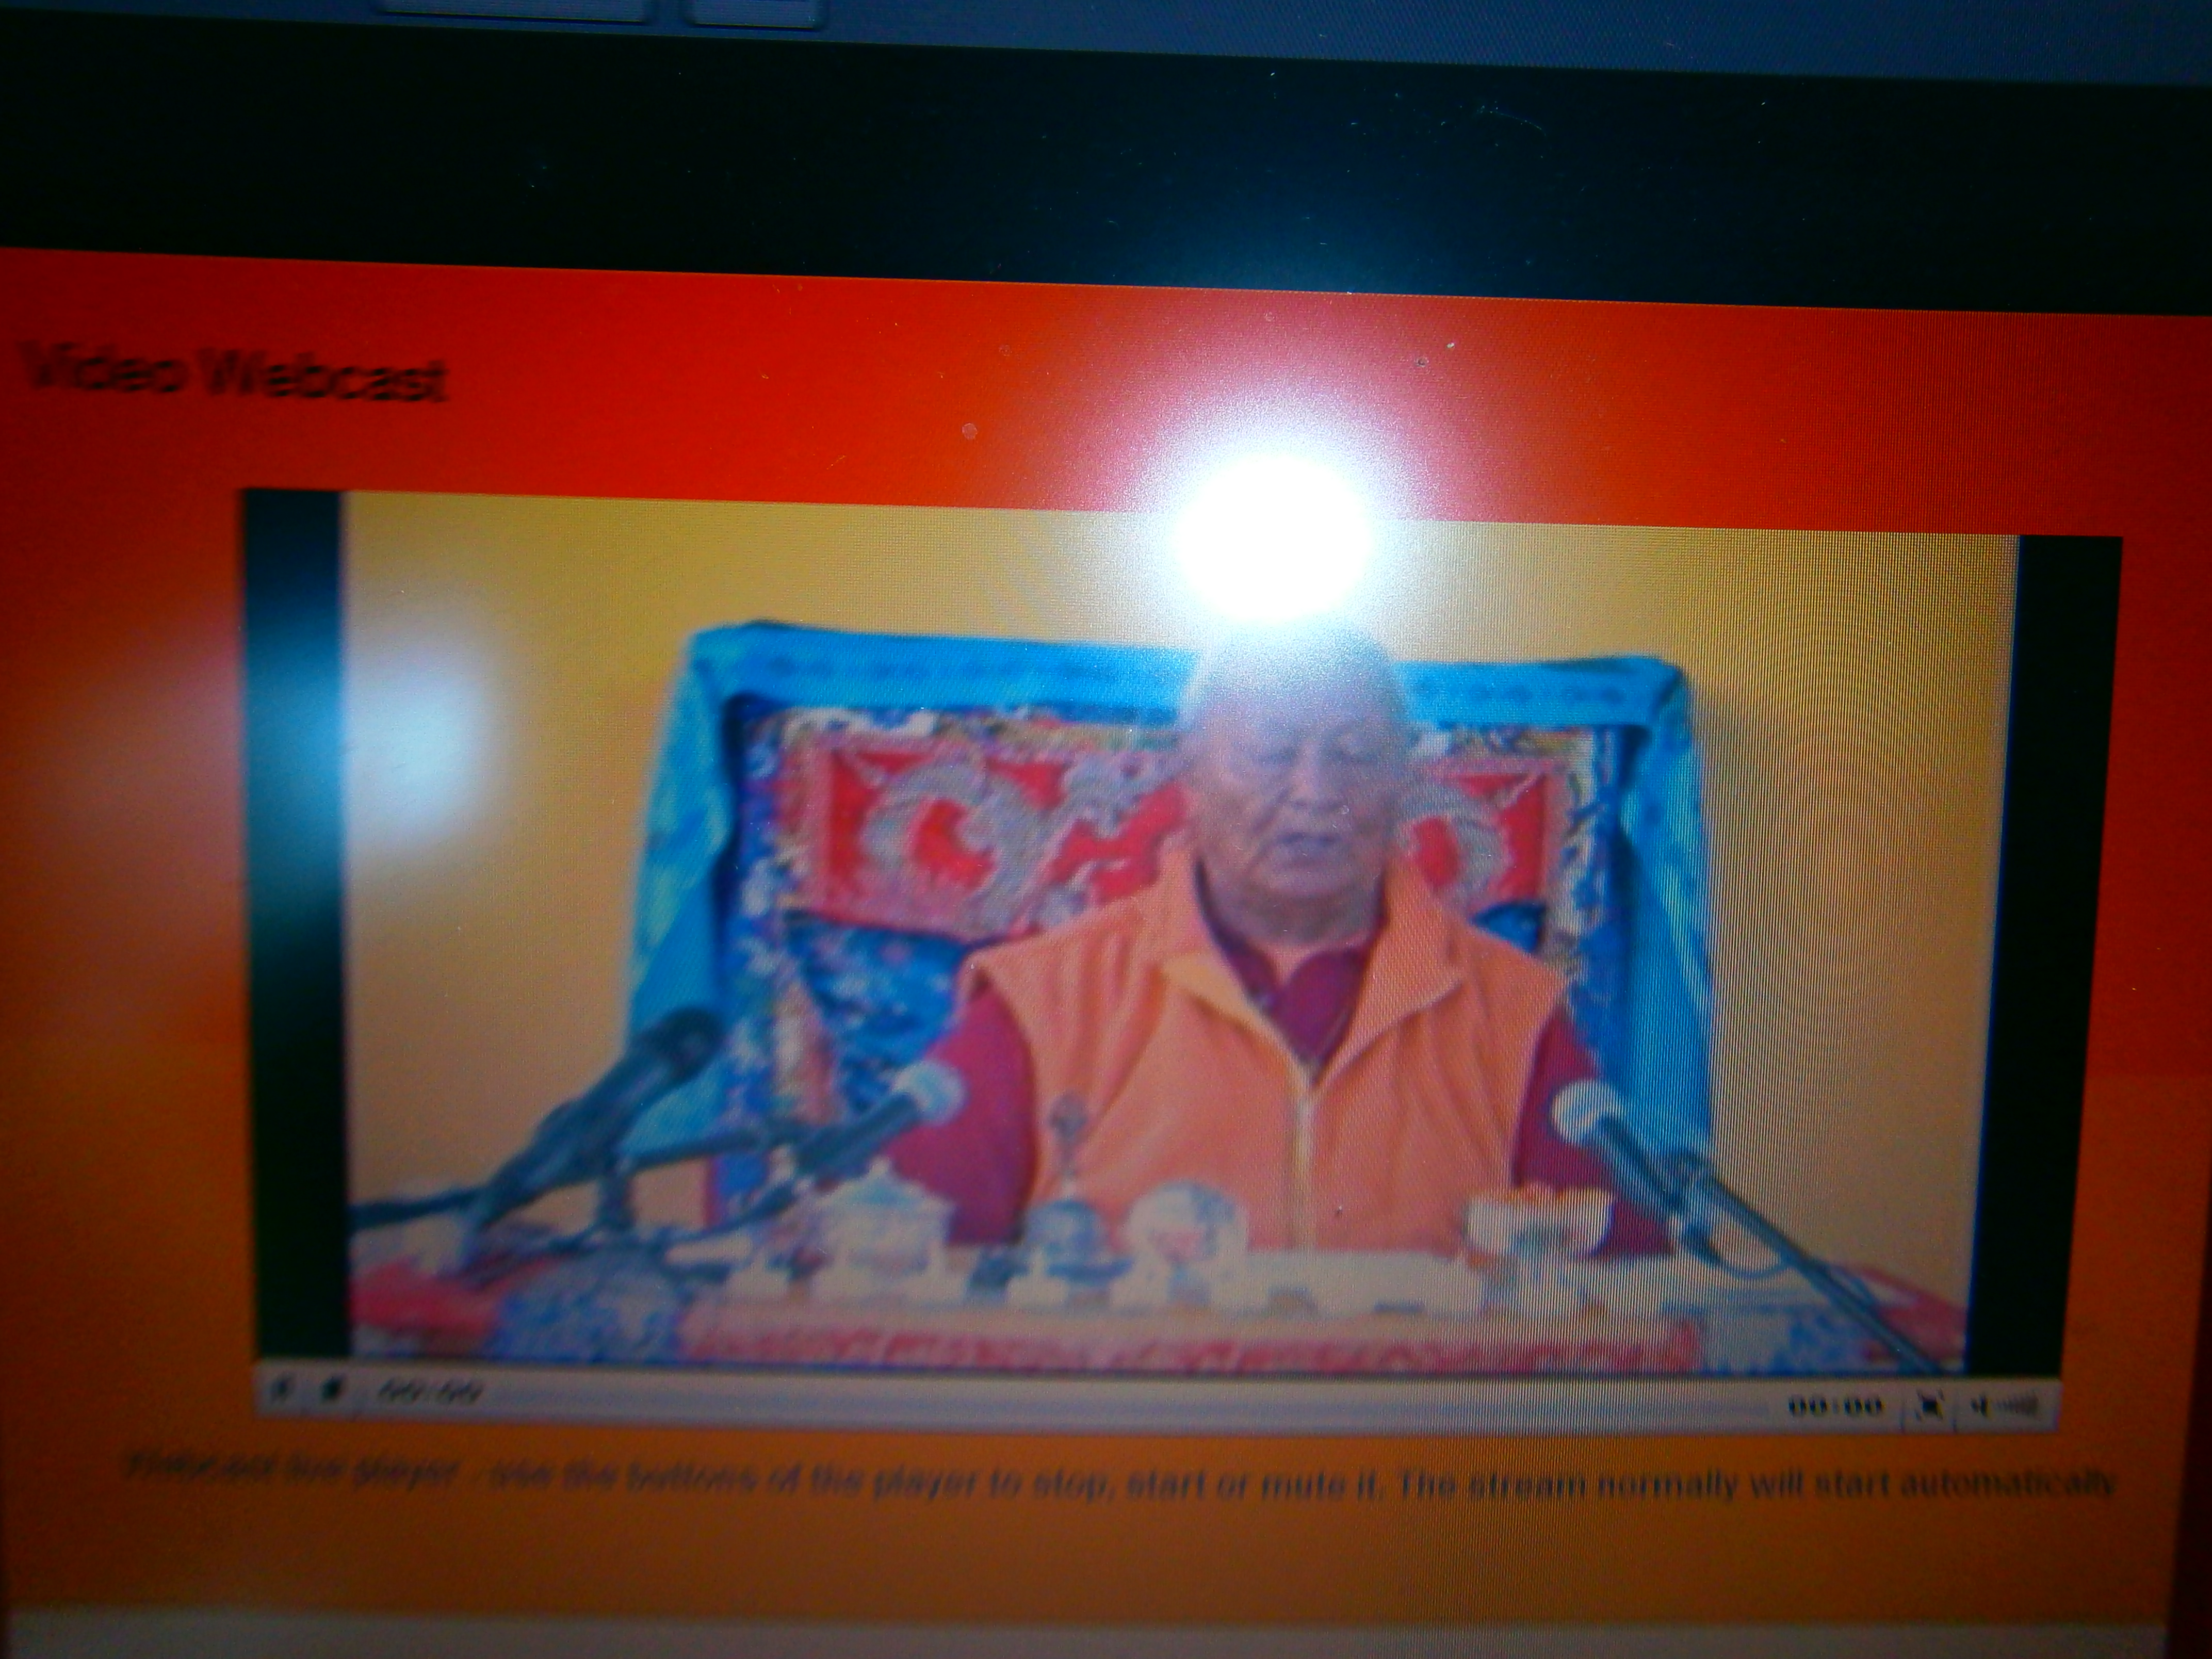 Chogyal Namkhai Norbu Rinpoche on open webcast 